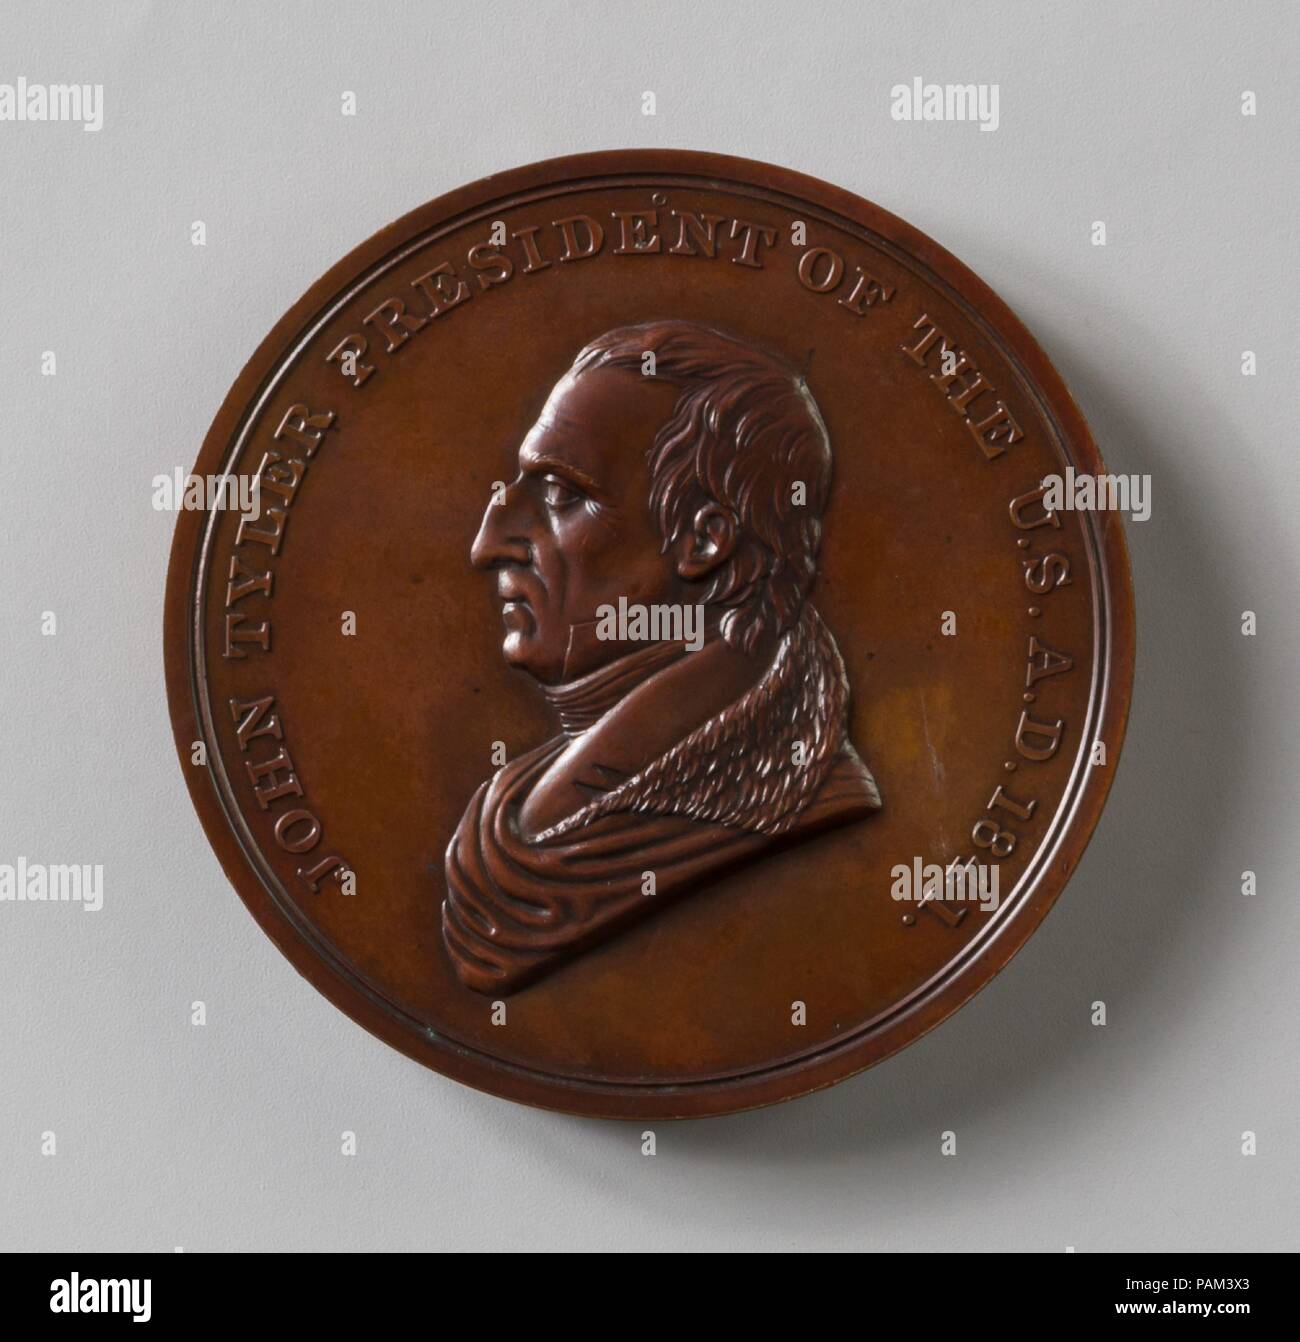 Médaille de John Tyler. Dimensions : diam. 2 1/2 in. (6,4 cm). Date : 1841. Musée : Metropolitan Museum of Art, New York, USA. Banque D'Images